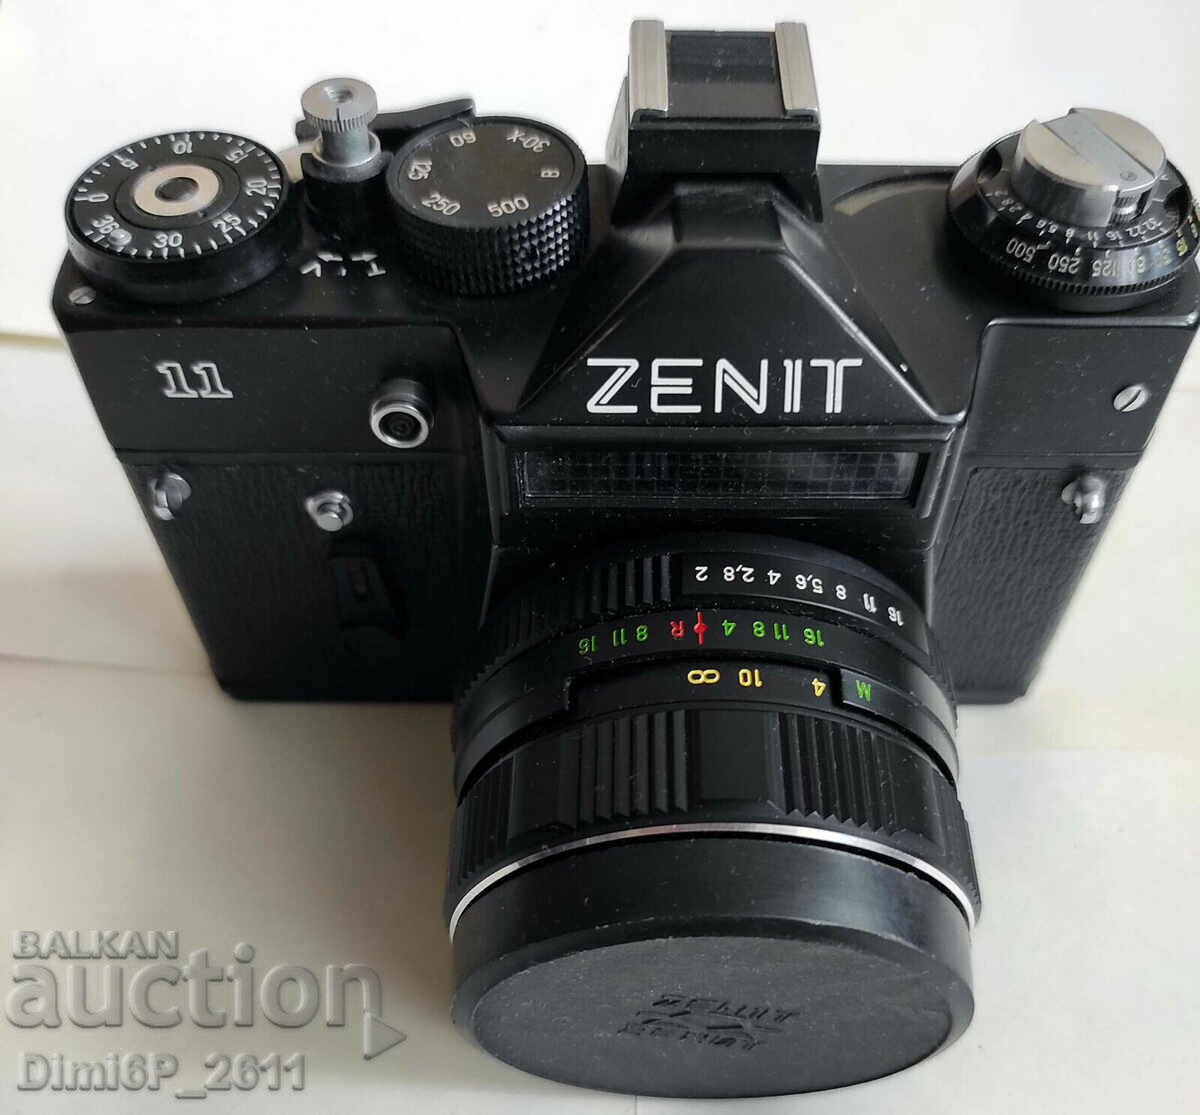 Руски SLR фотоапарат Zenit 11 XP с обектив Helios 44M 2.0/58